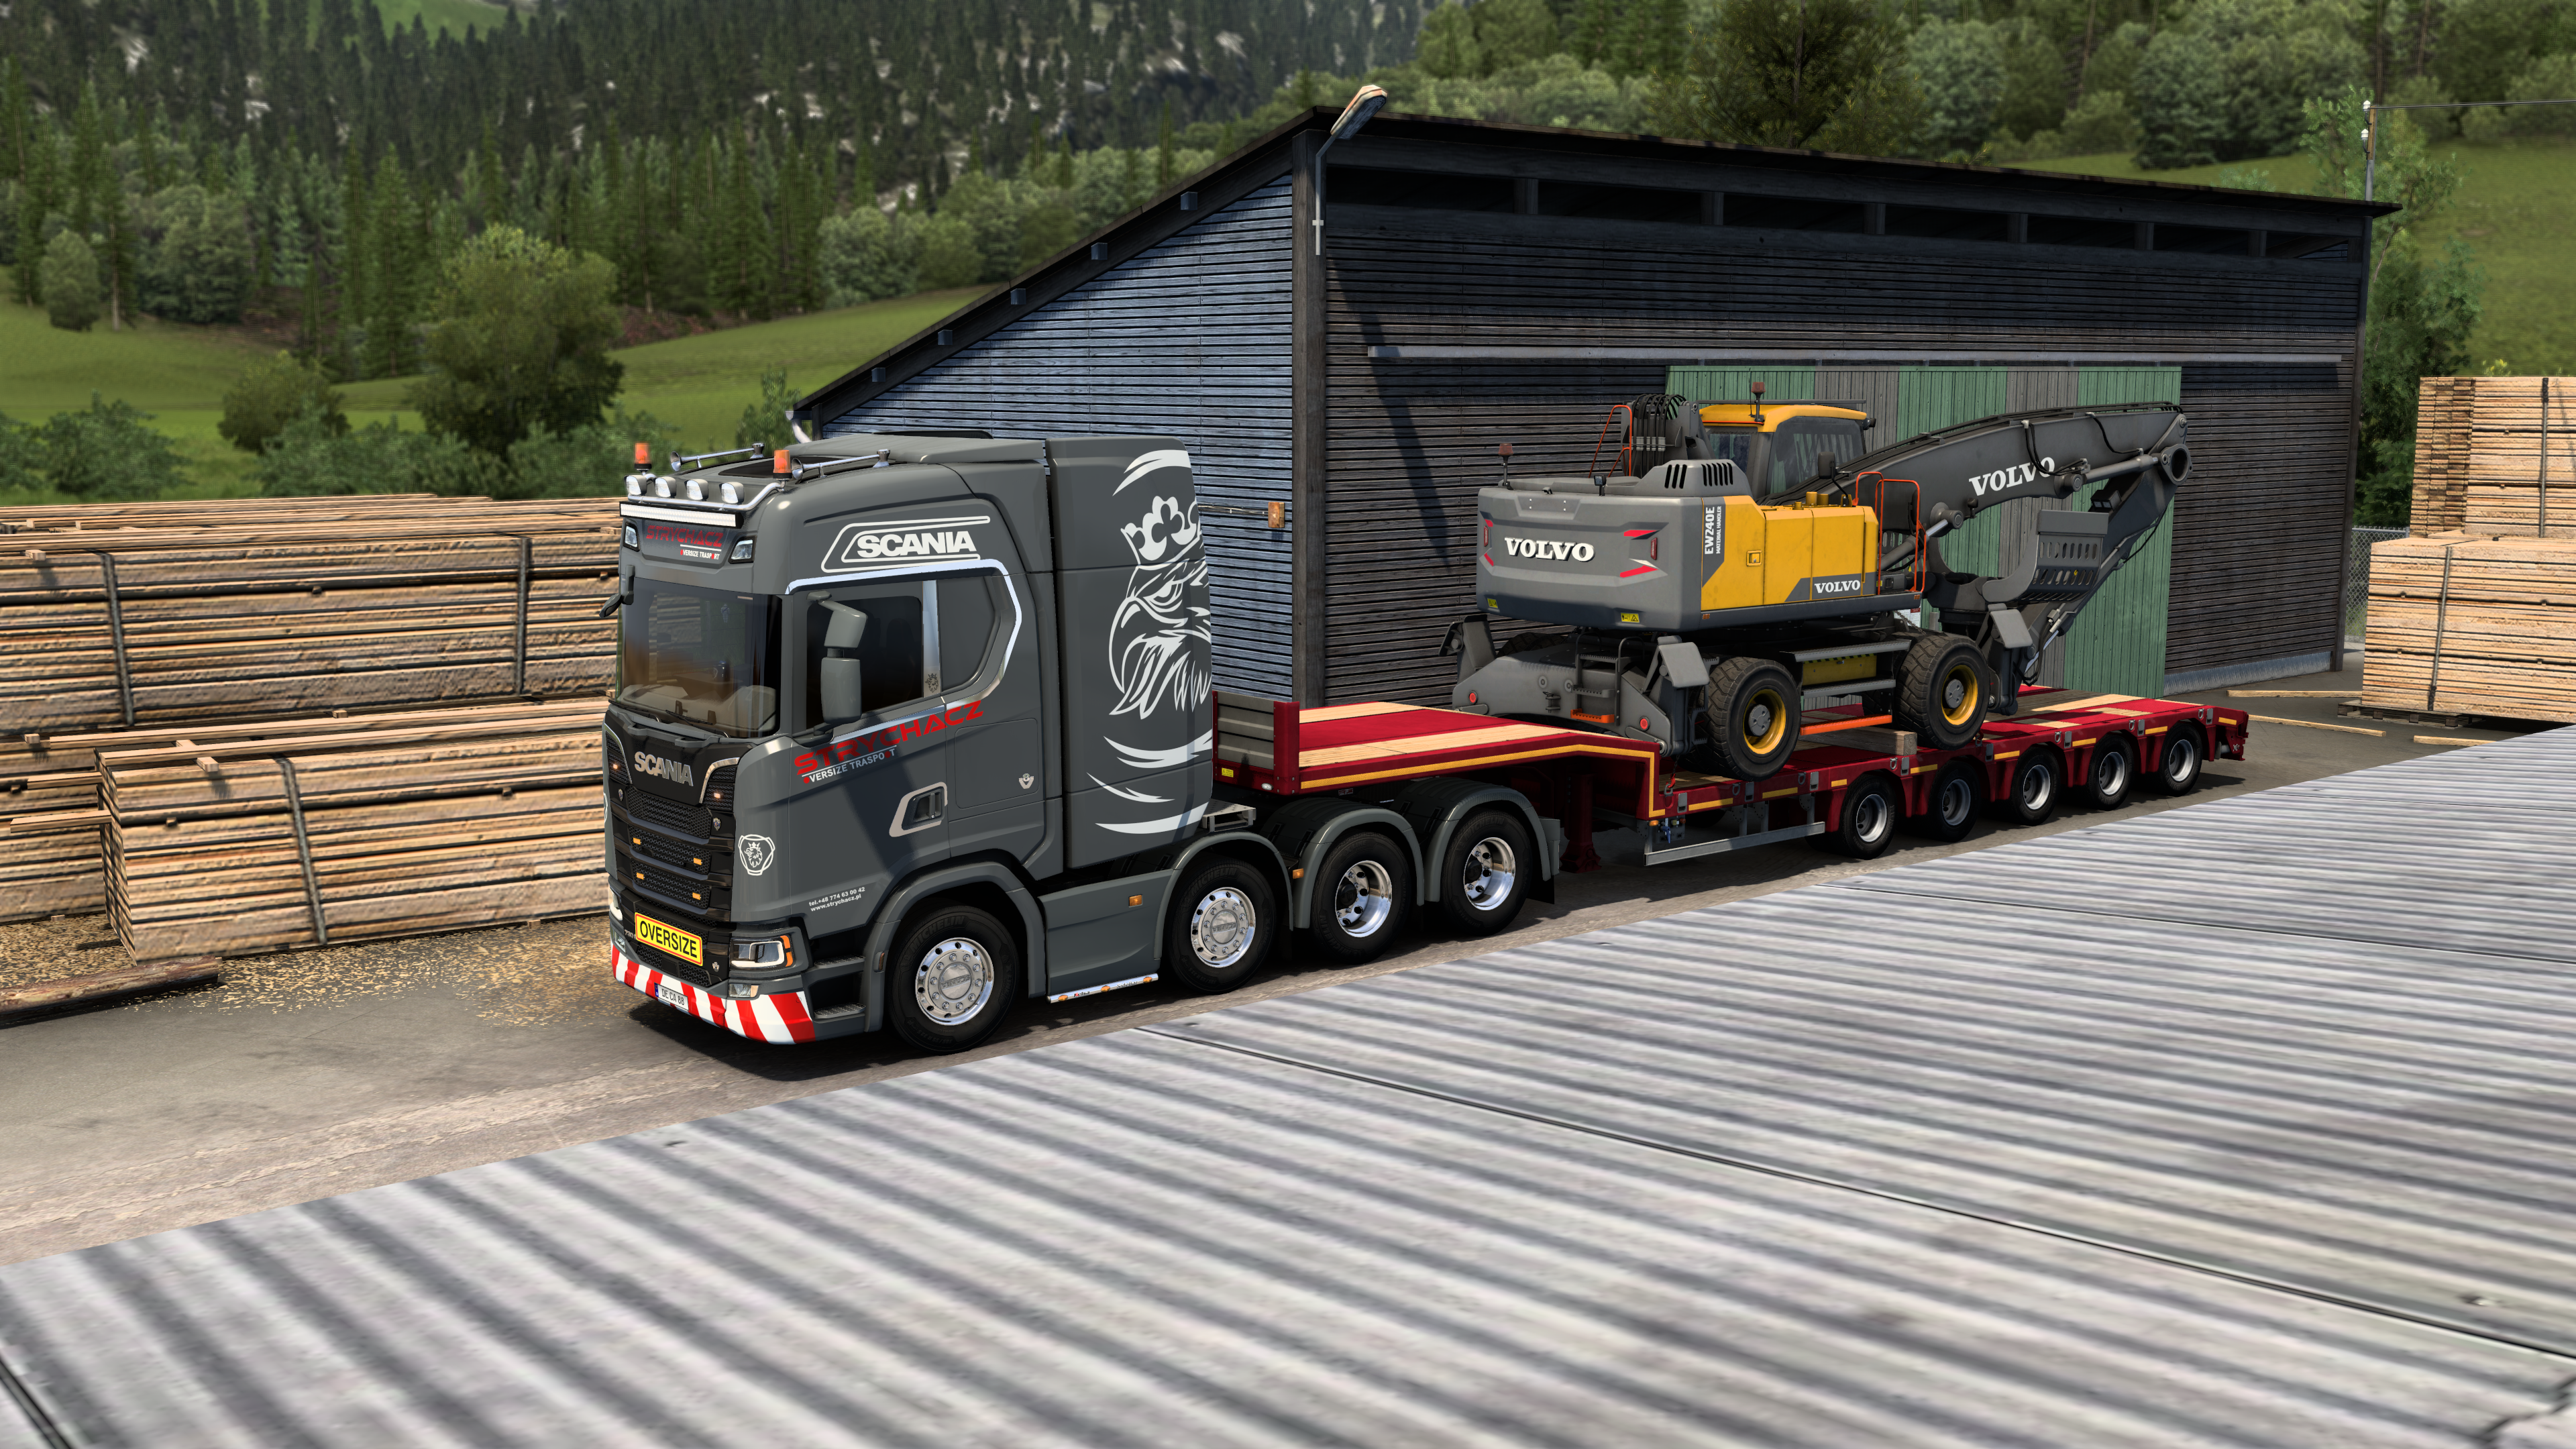 Truck Scania Euro Truck Simulator 2 Vehicle Video Games CGi Side View Trees Wood 3840x2160